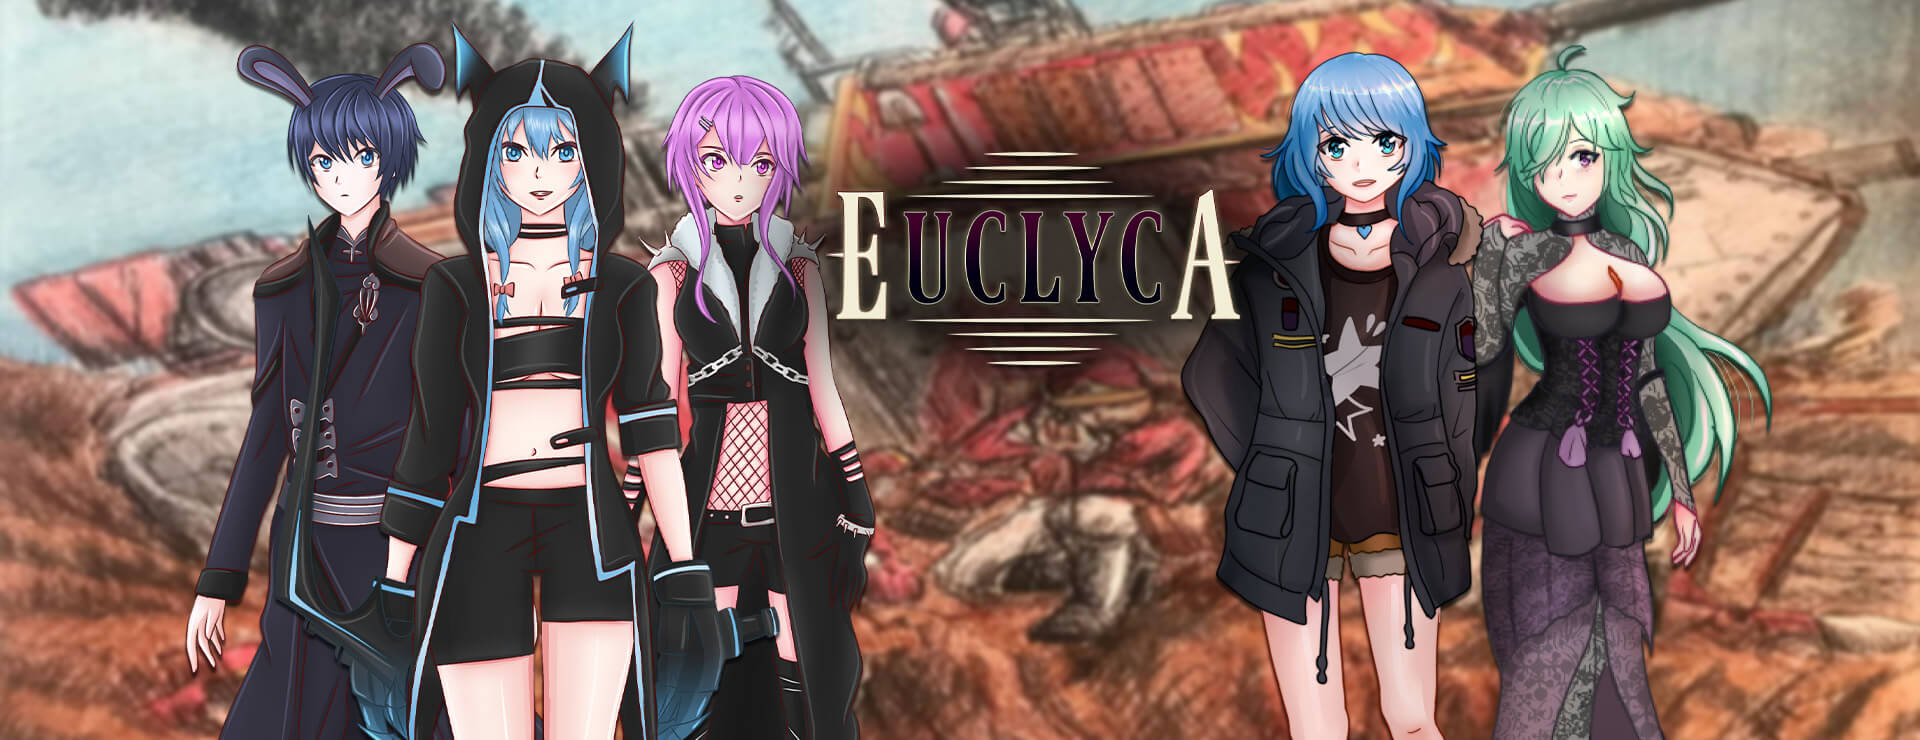 Euclyca - RPG Game